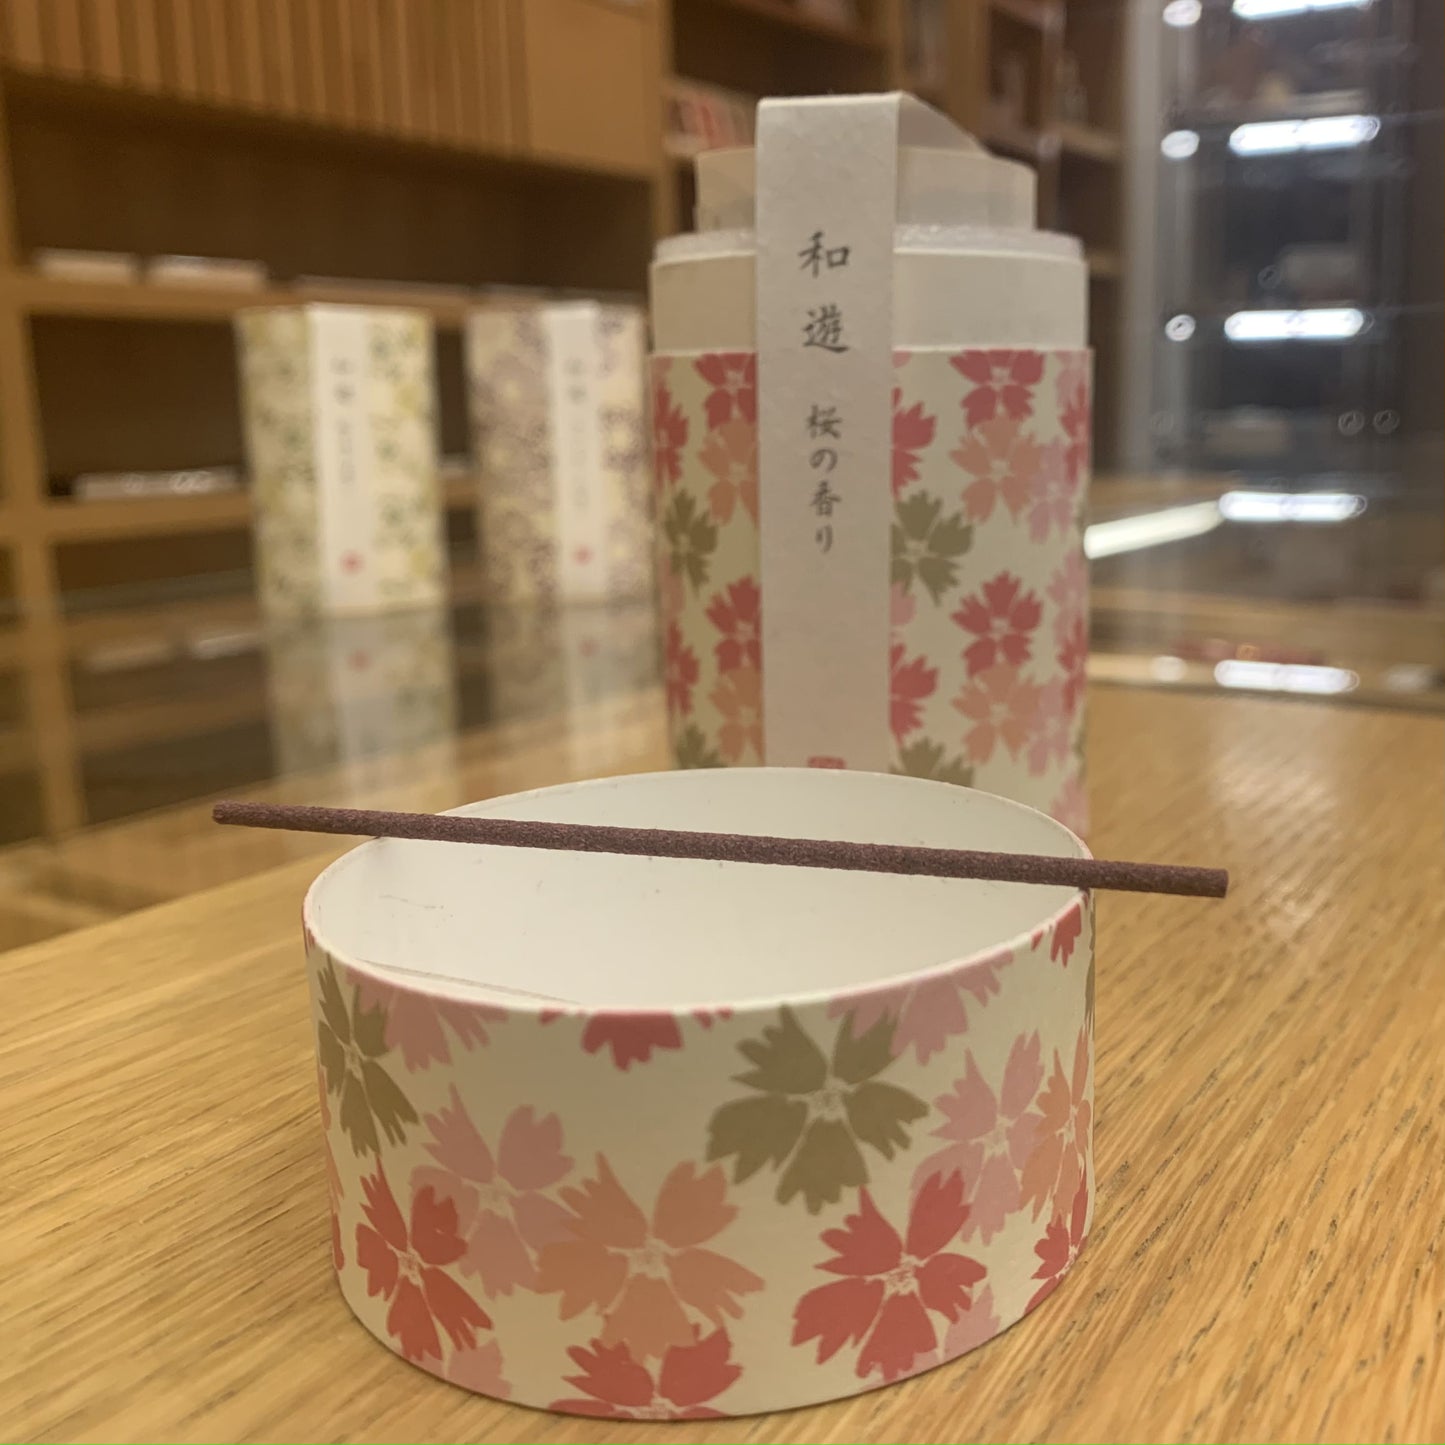 Surprise japanese incense